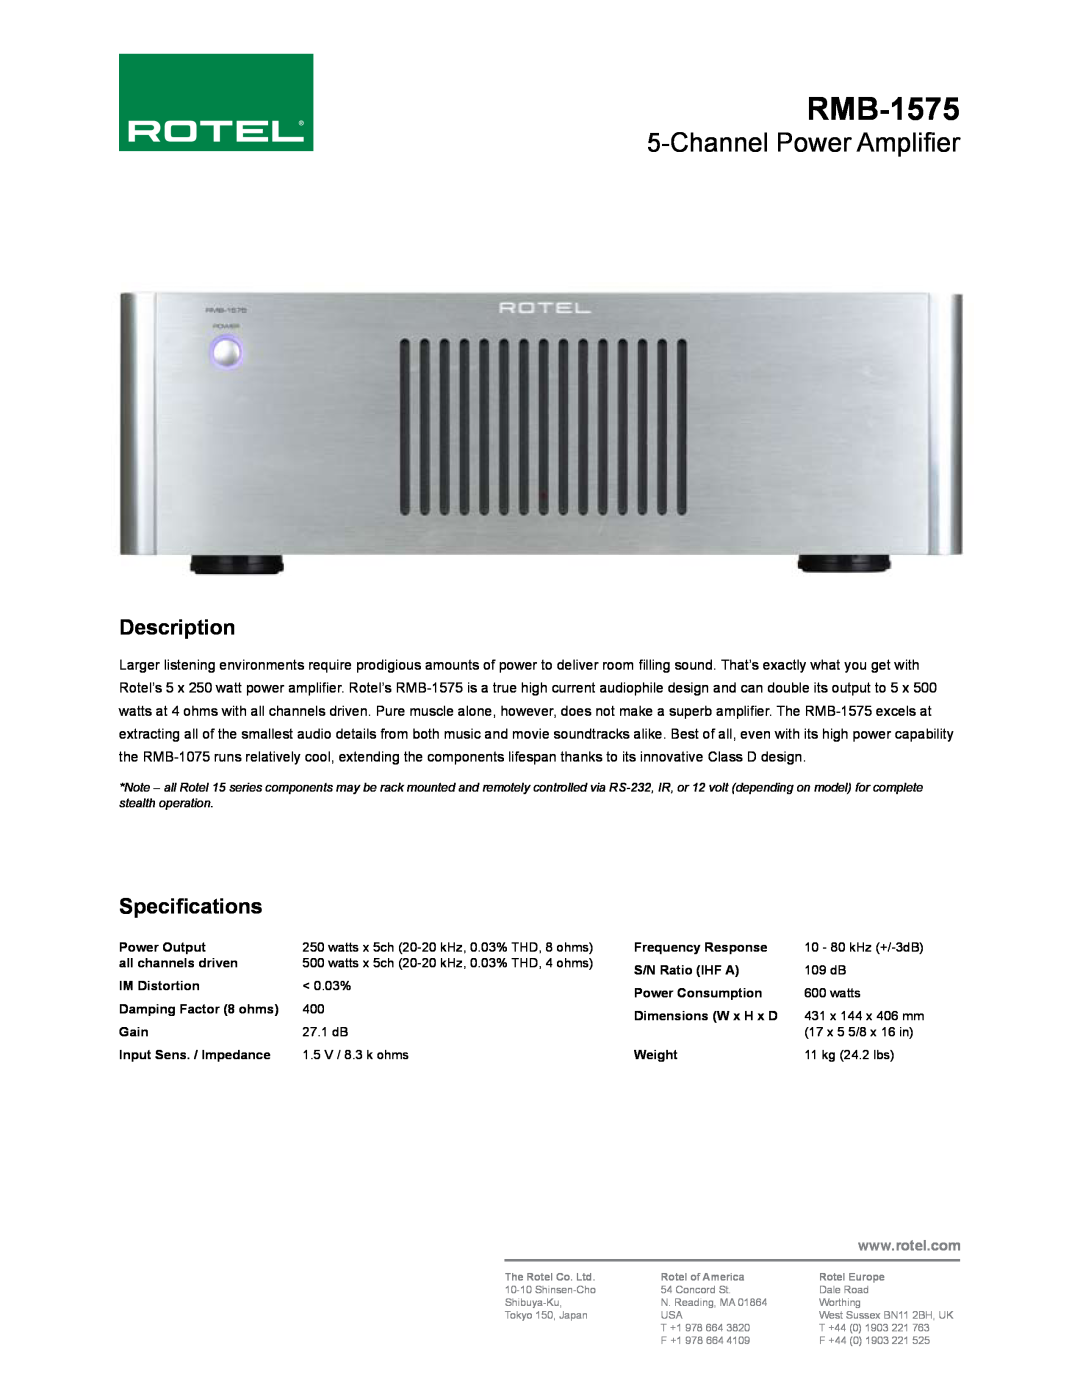 Rotel RMB-1575 dimensions ChannelPower Amplifier, Description, Specifications 